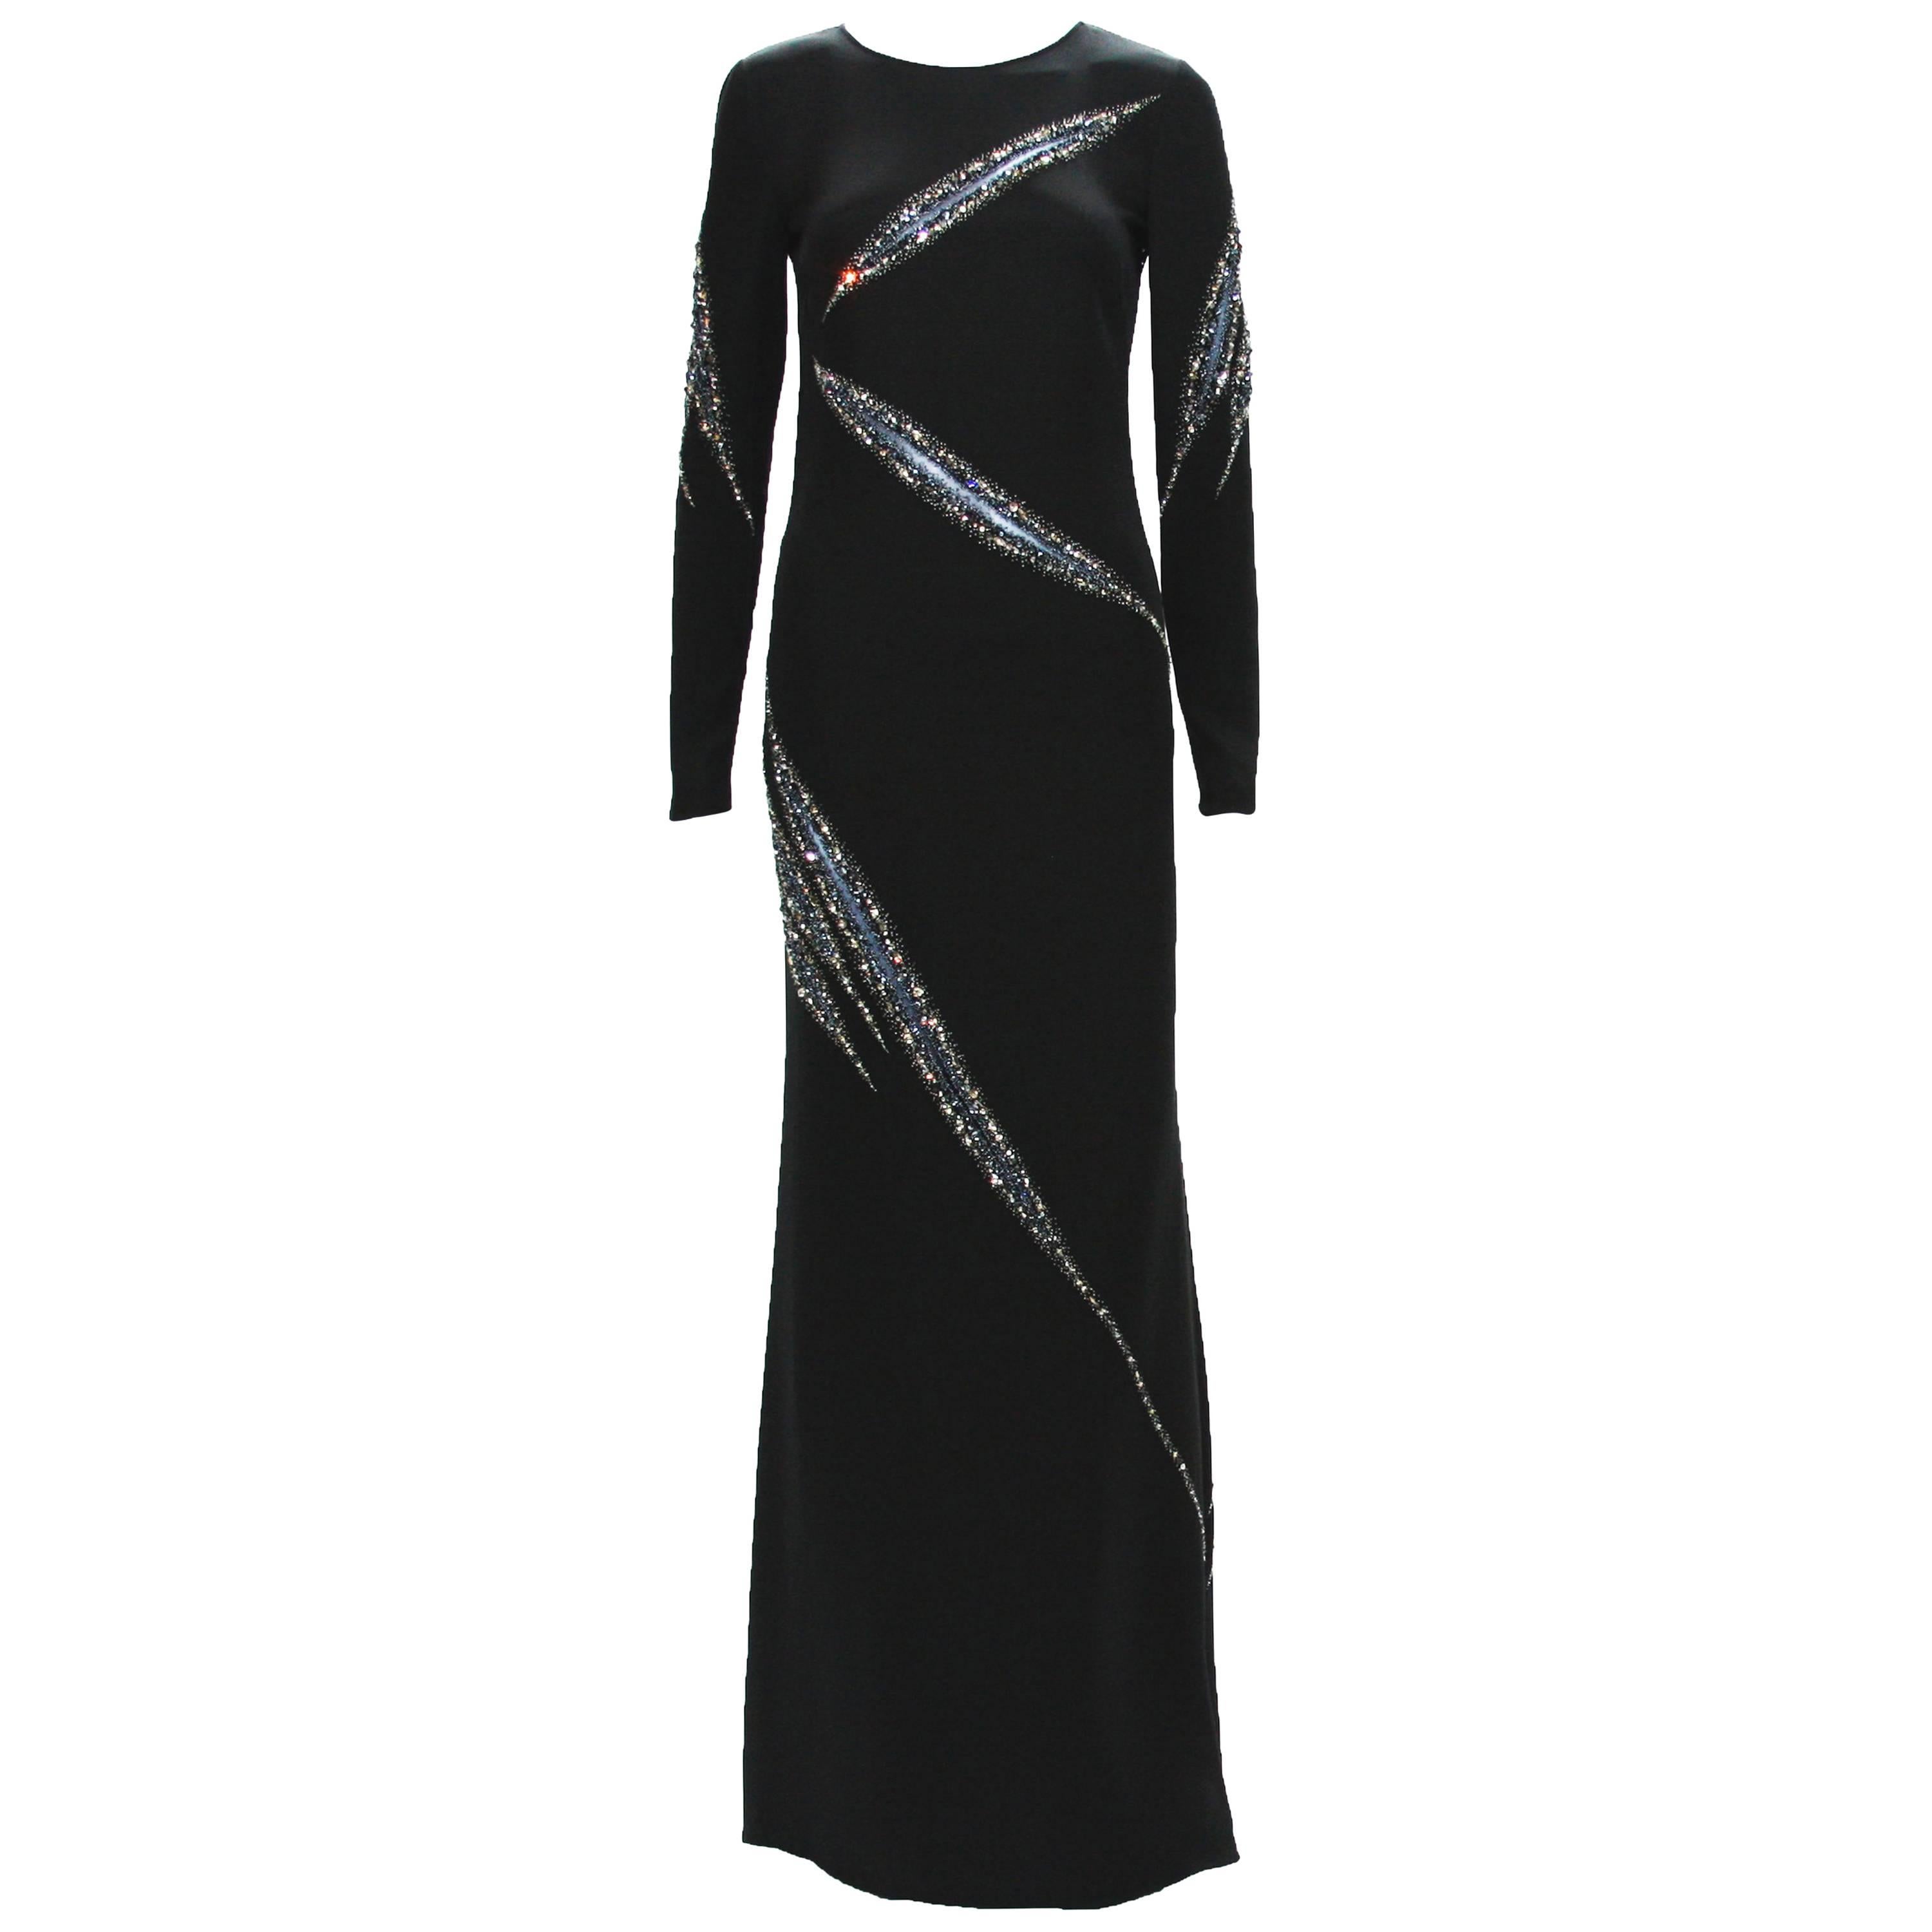 $8500 Emilio Pucci Embellished Gown Eva Longoria Wore to the ALMA Awards 38 US 4